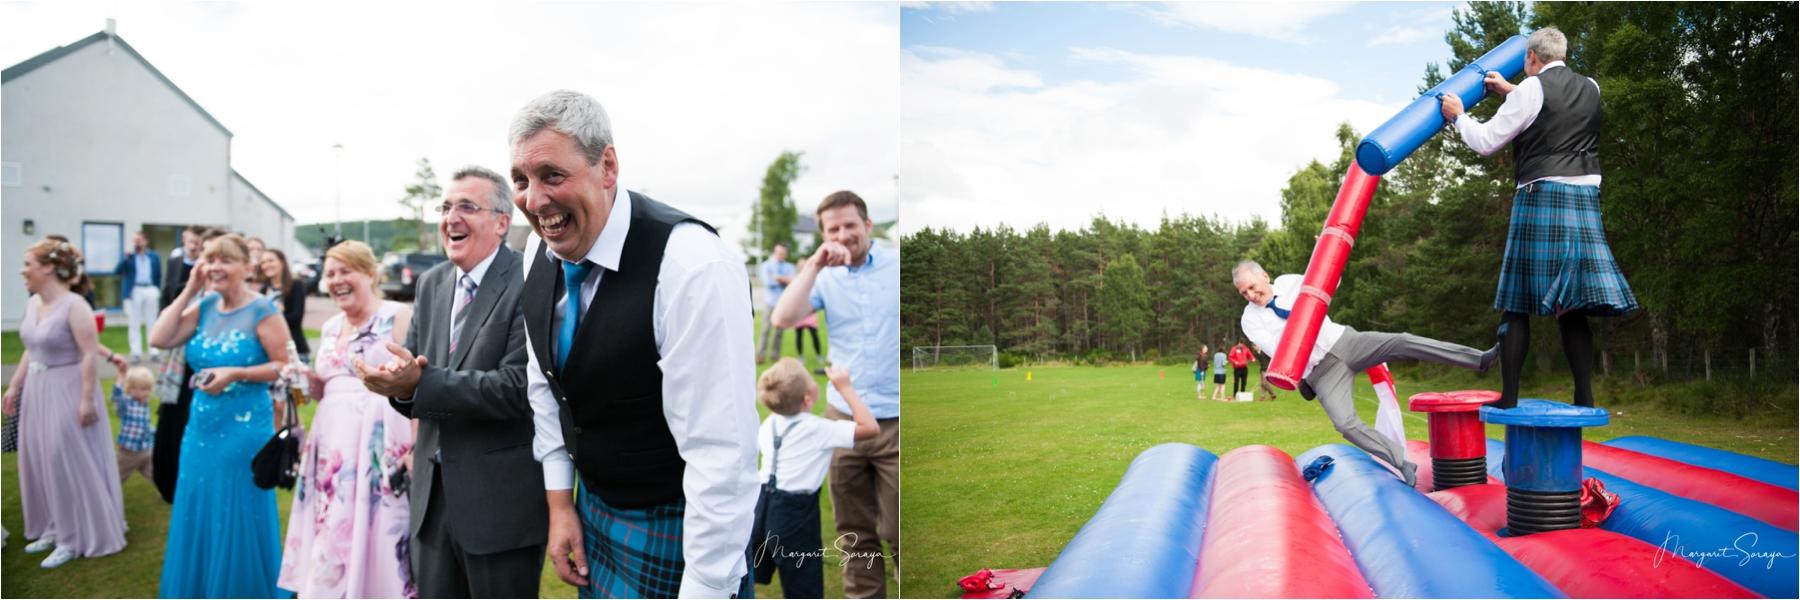 fun games at reportage wedding Scotland highlands photographer 